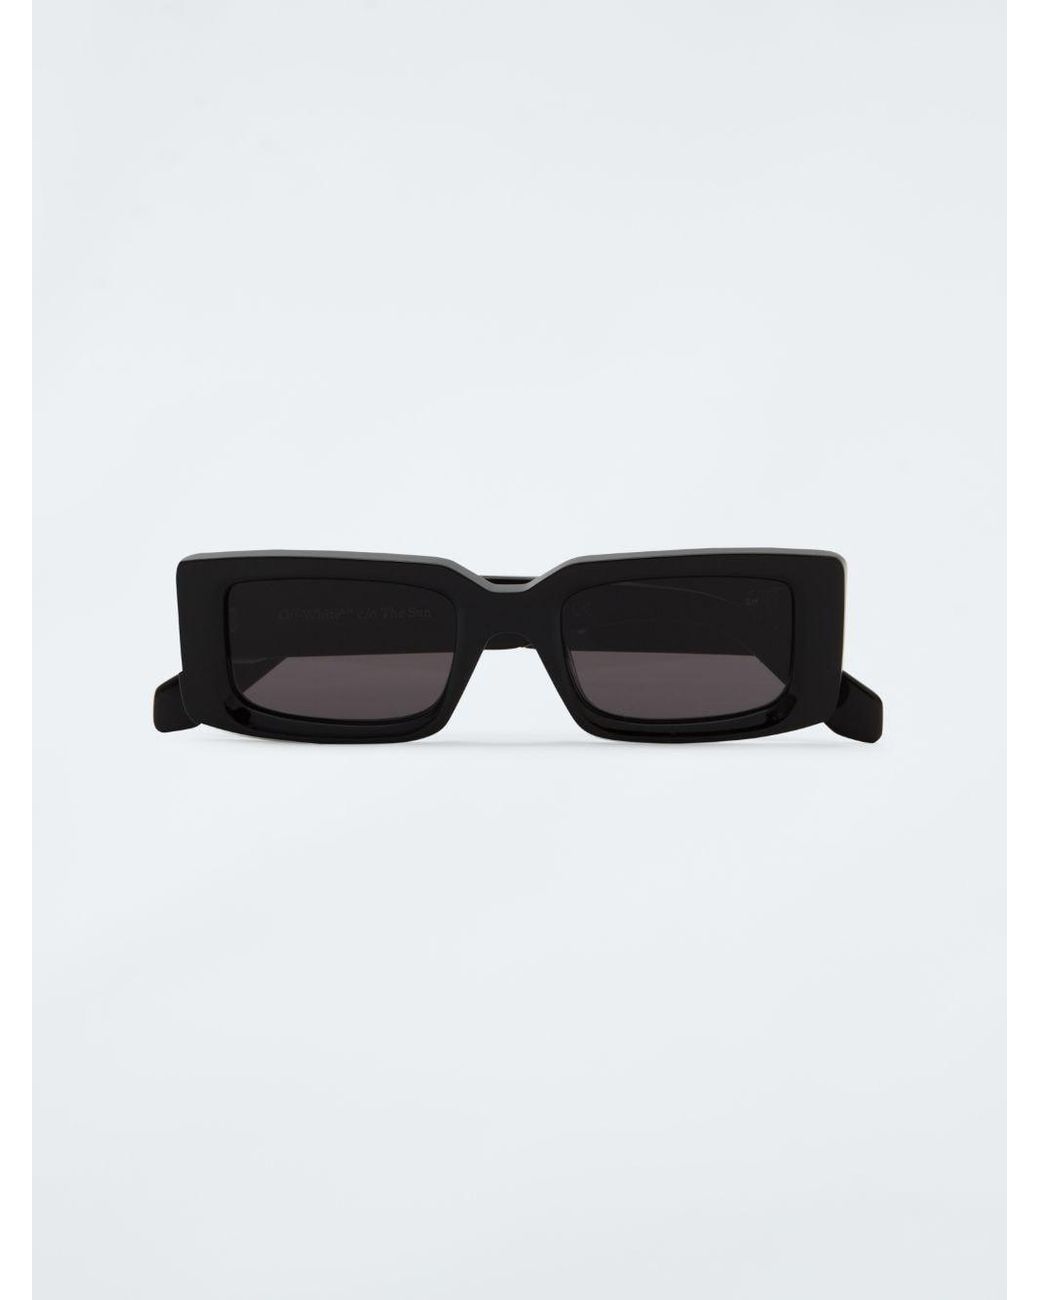 Off-White c/o Virgil Abloh Virgil Sunglasses / Dark Grey in Black